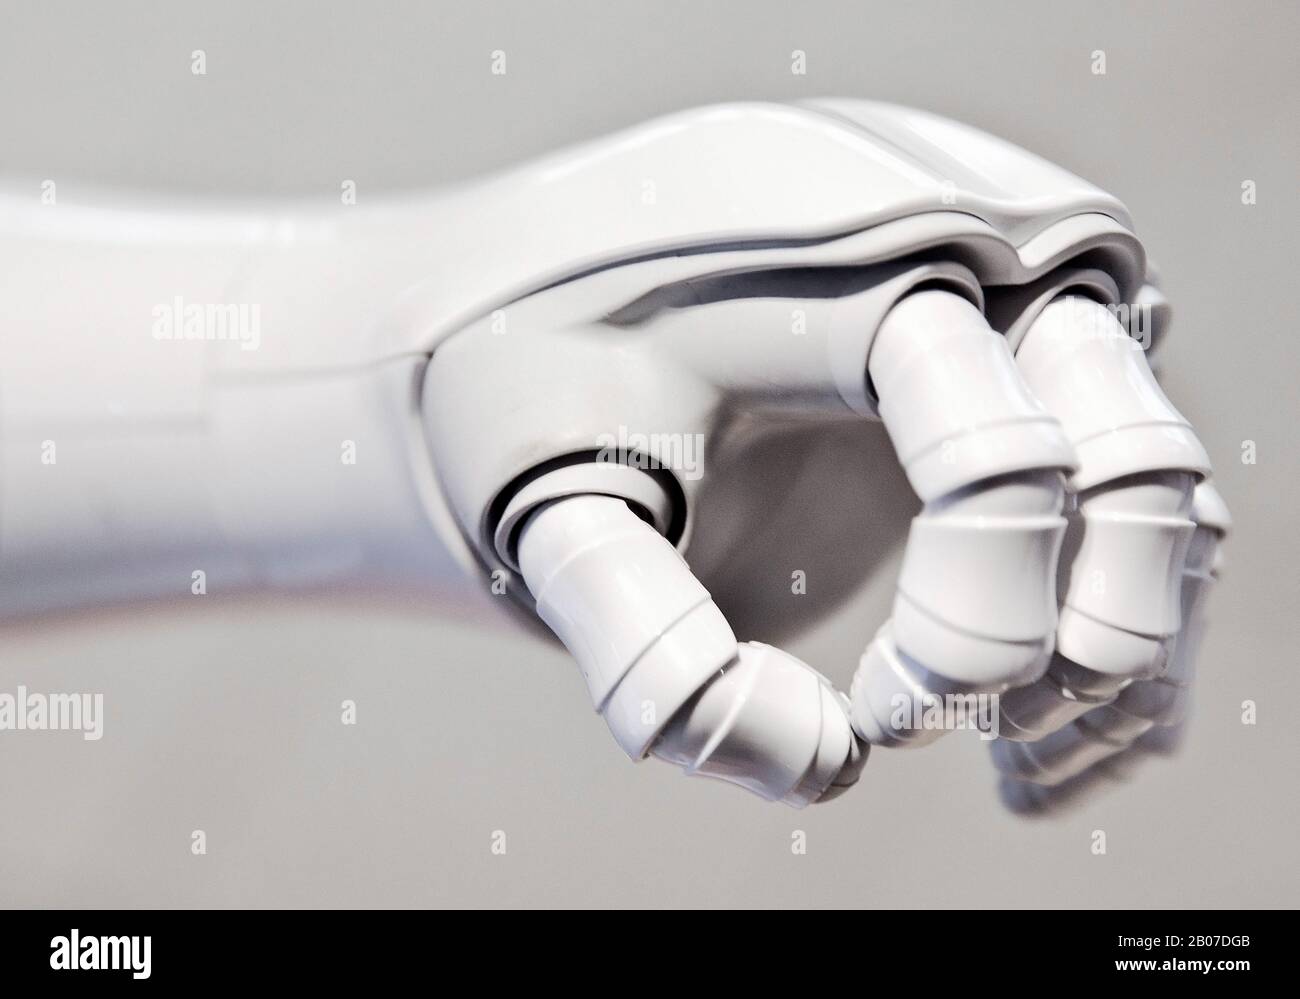 hand of humanoid robot Pepper, Germany Stock Photo